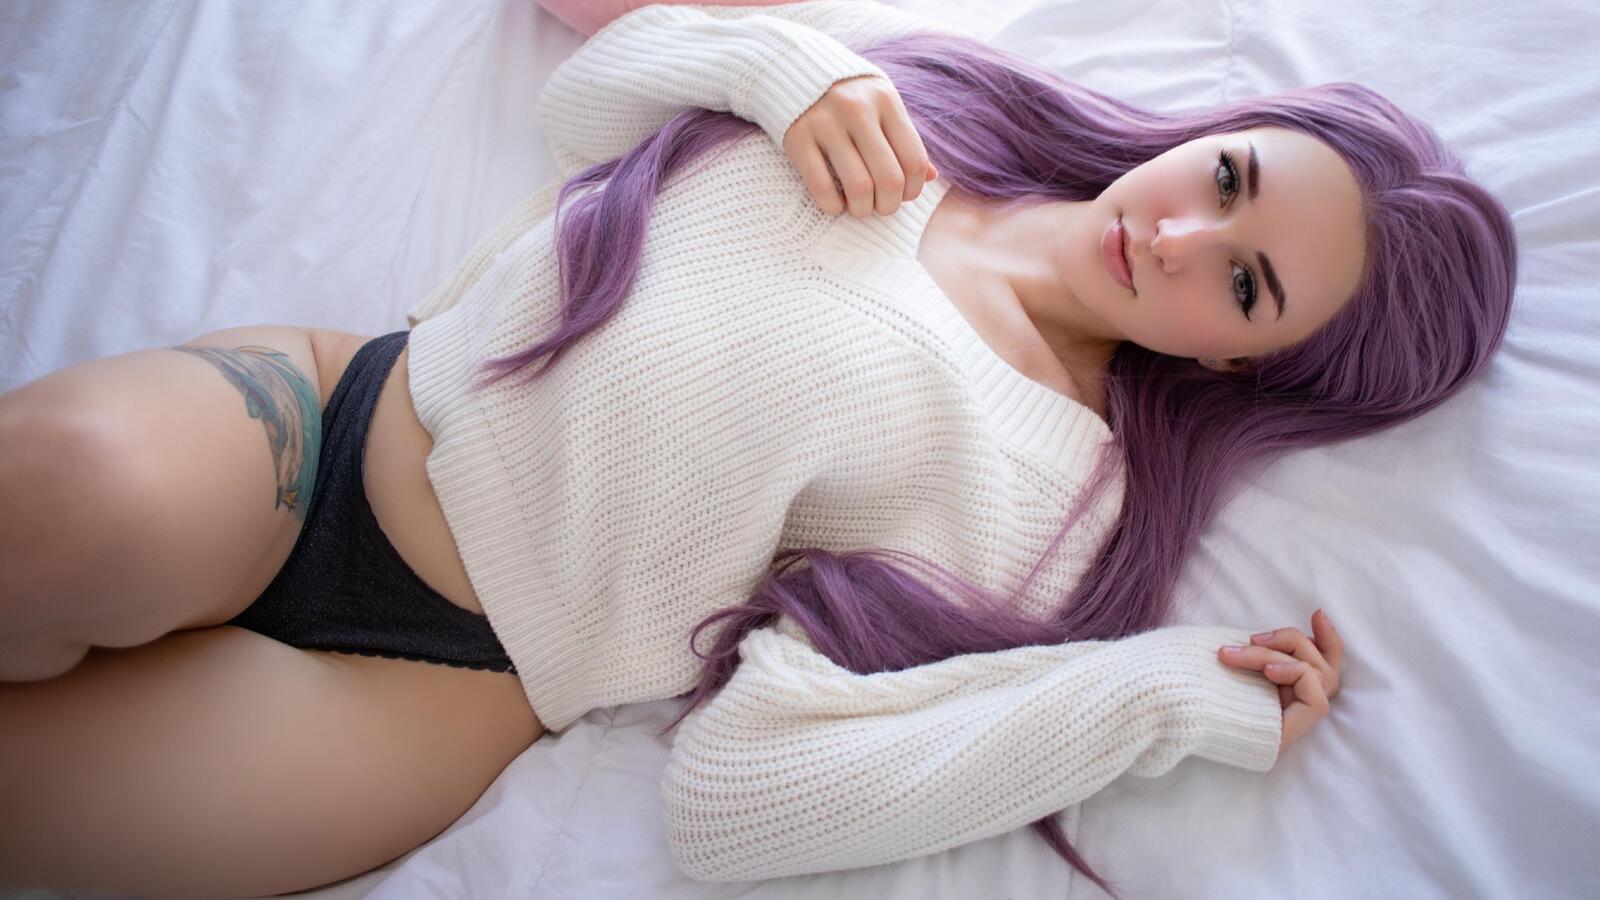 Free photo Beautiful girl with long purple hair